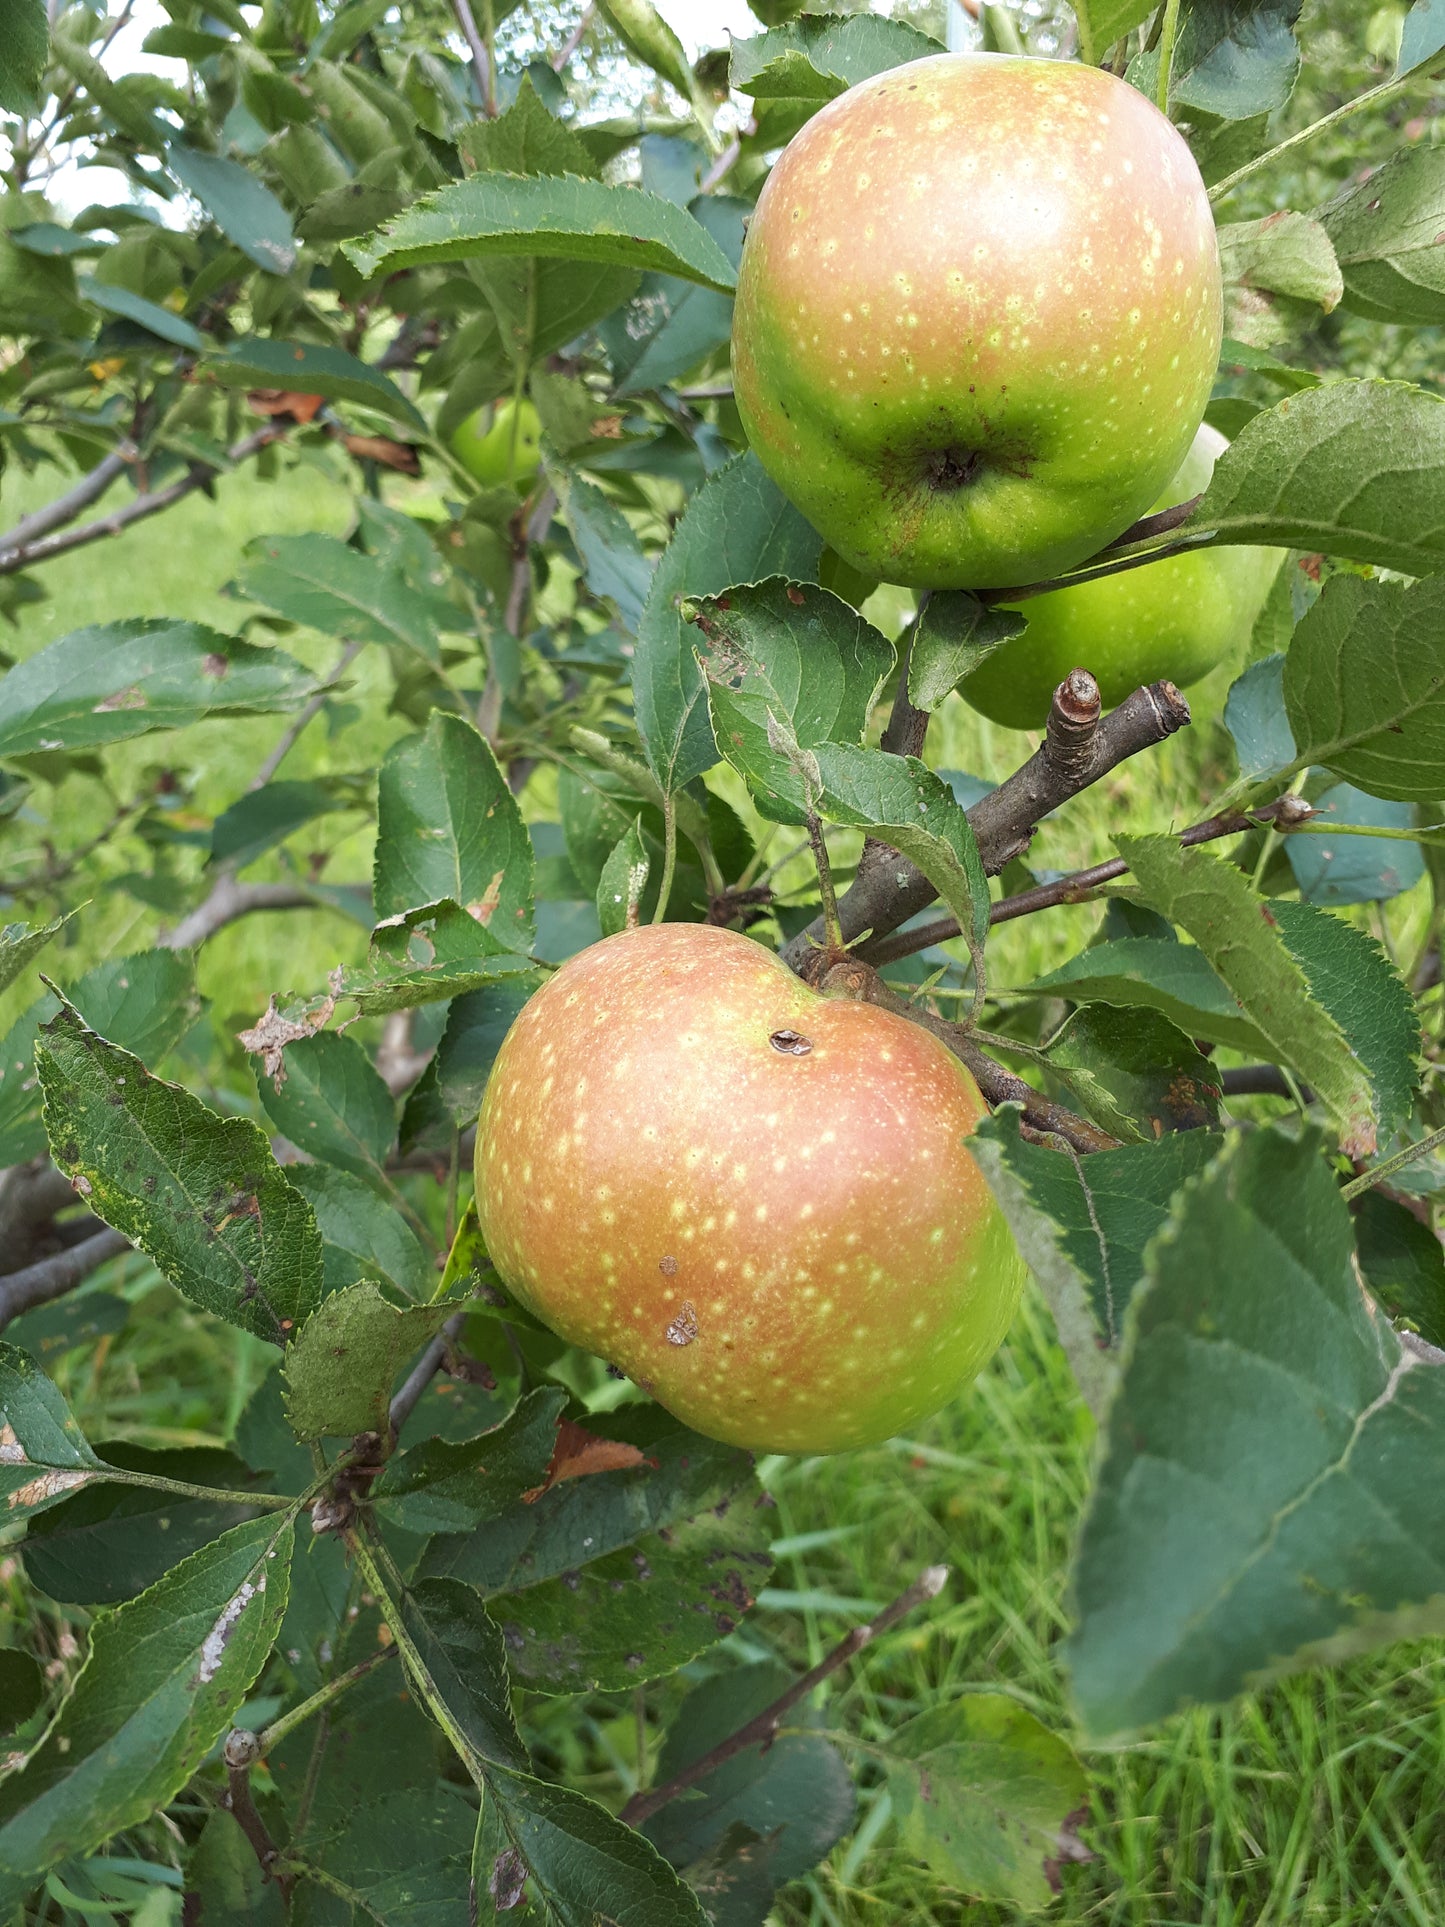 Rhode Island Greening Apple